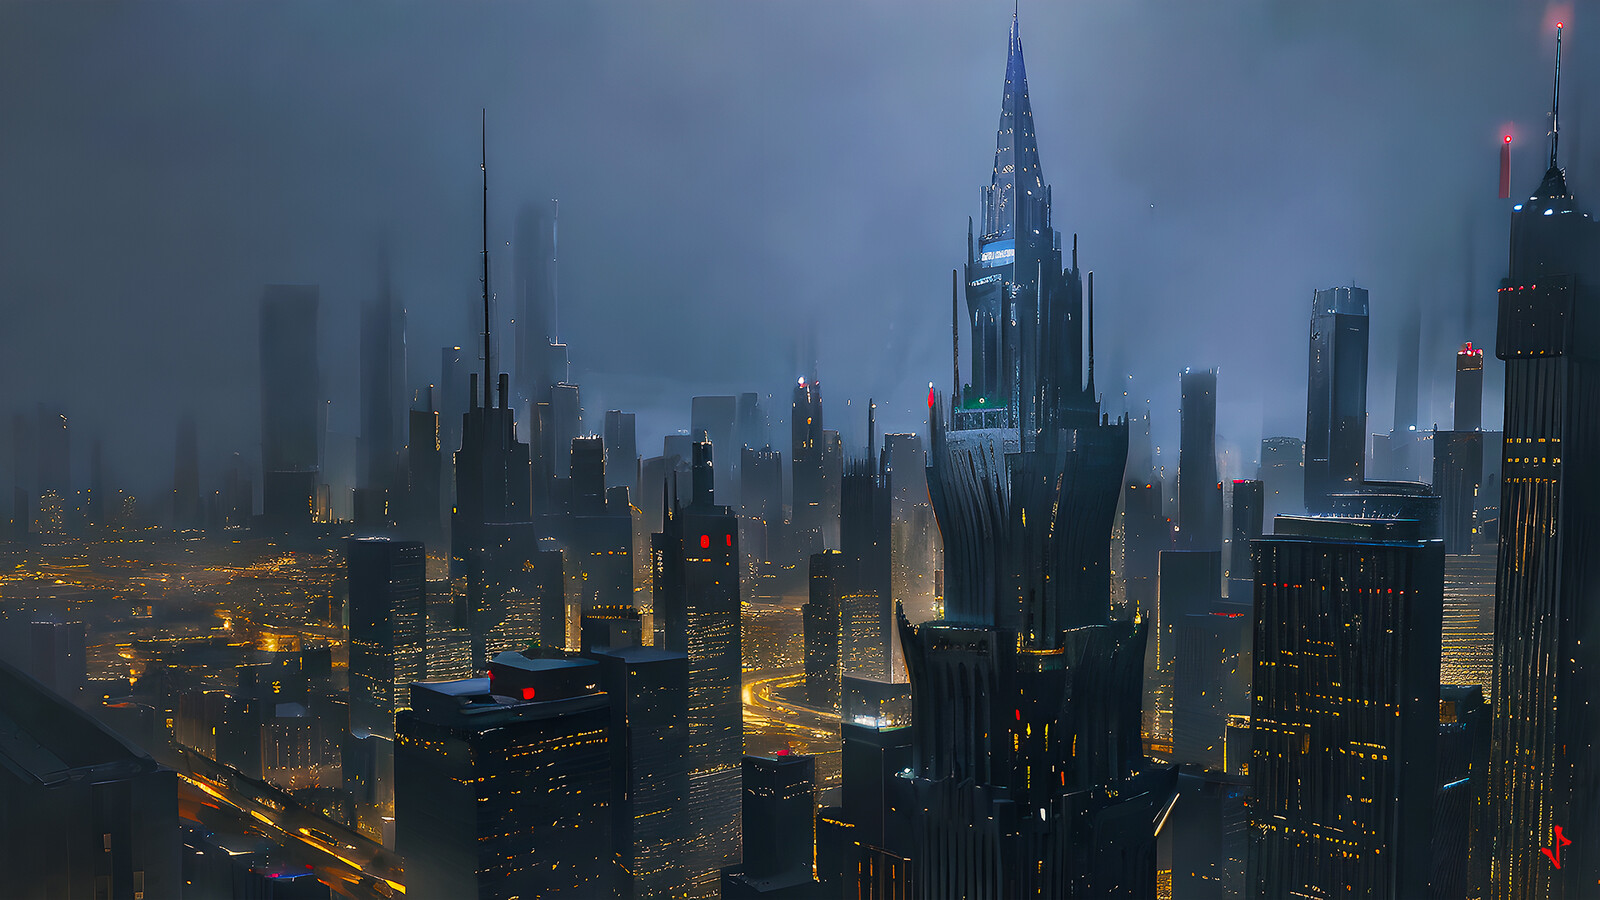 //Gotham City